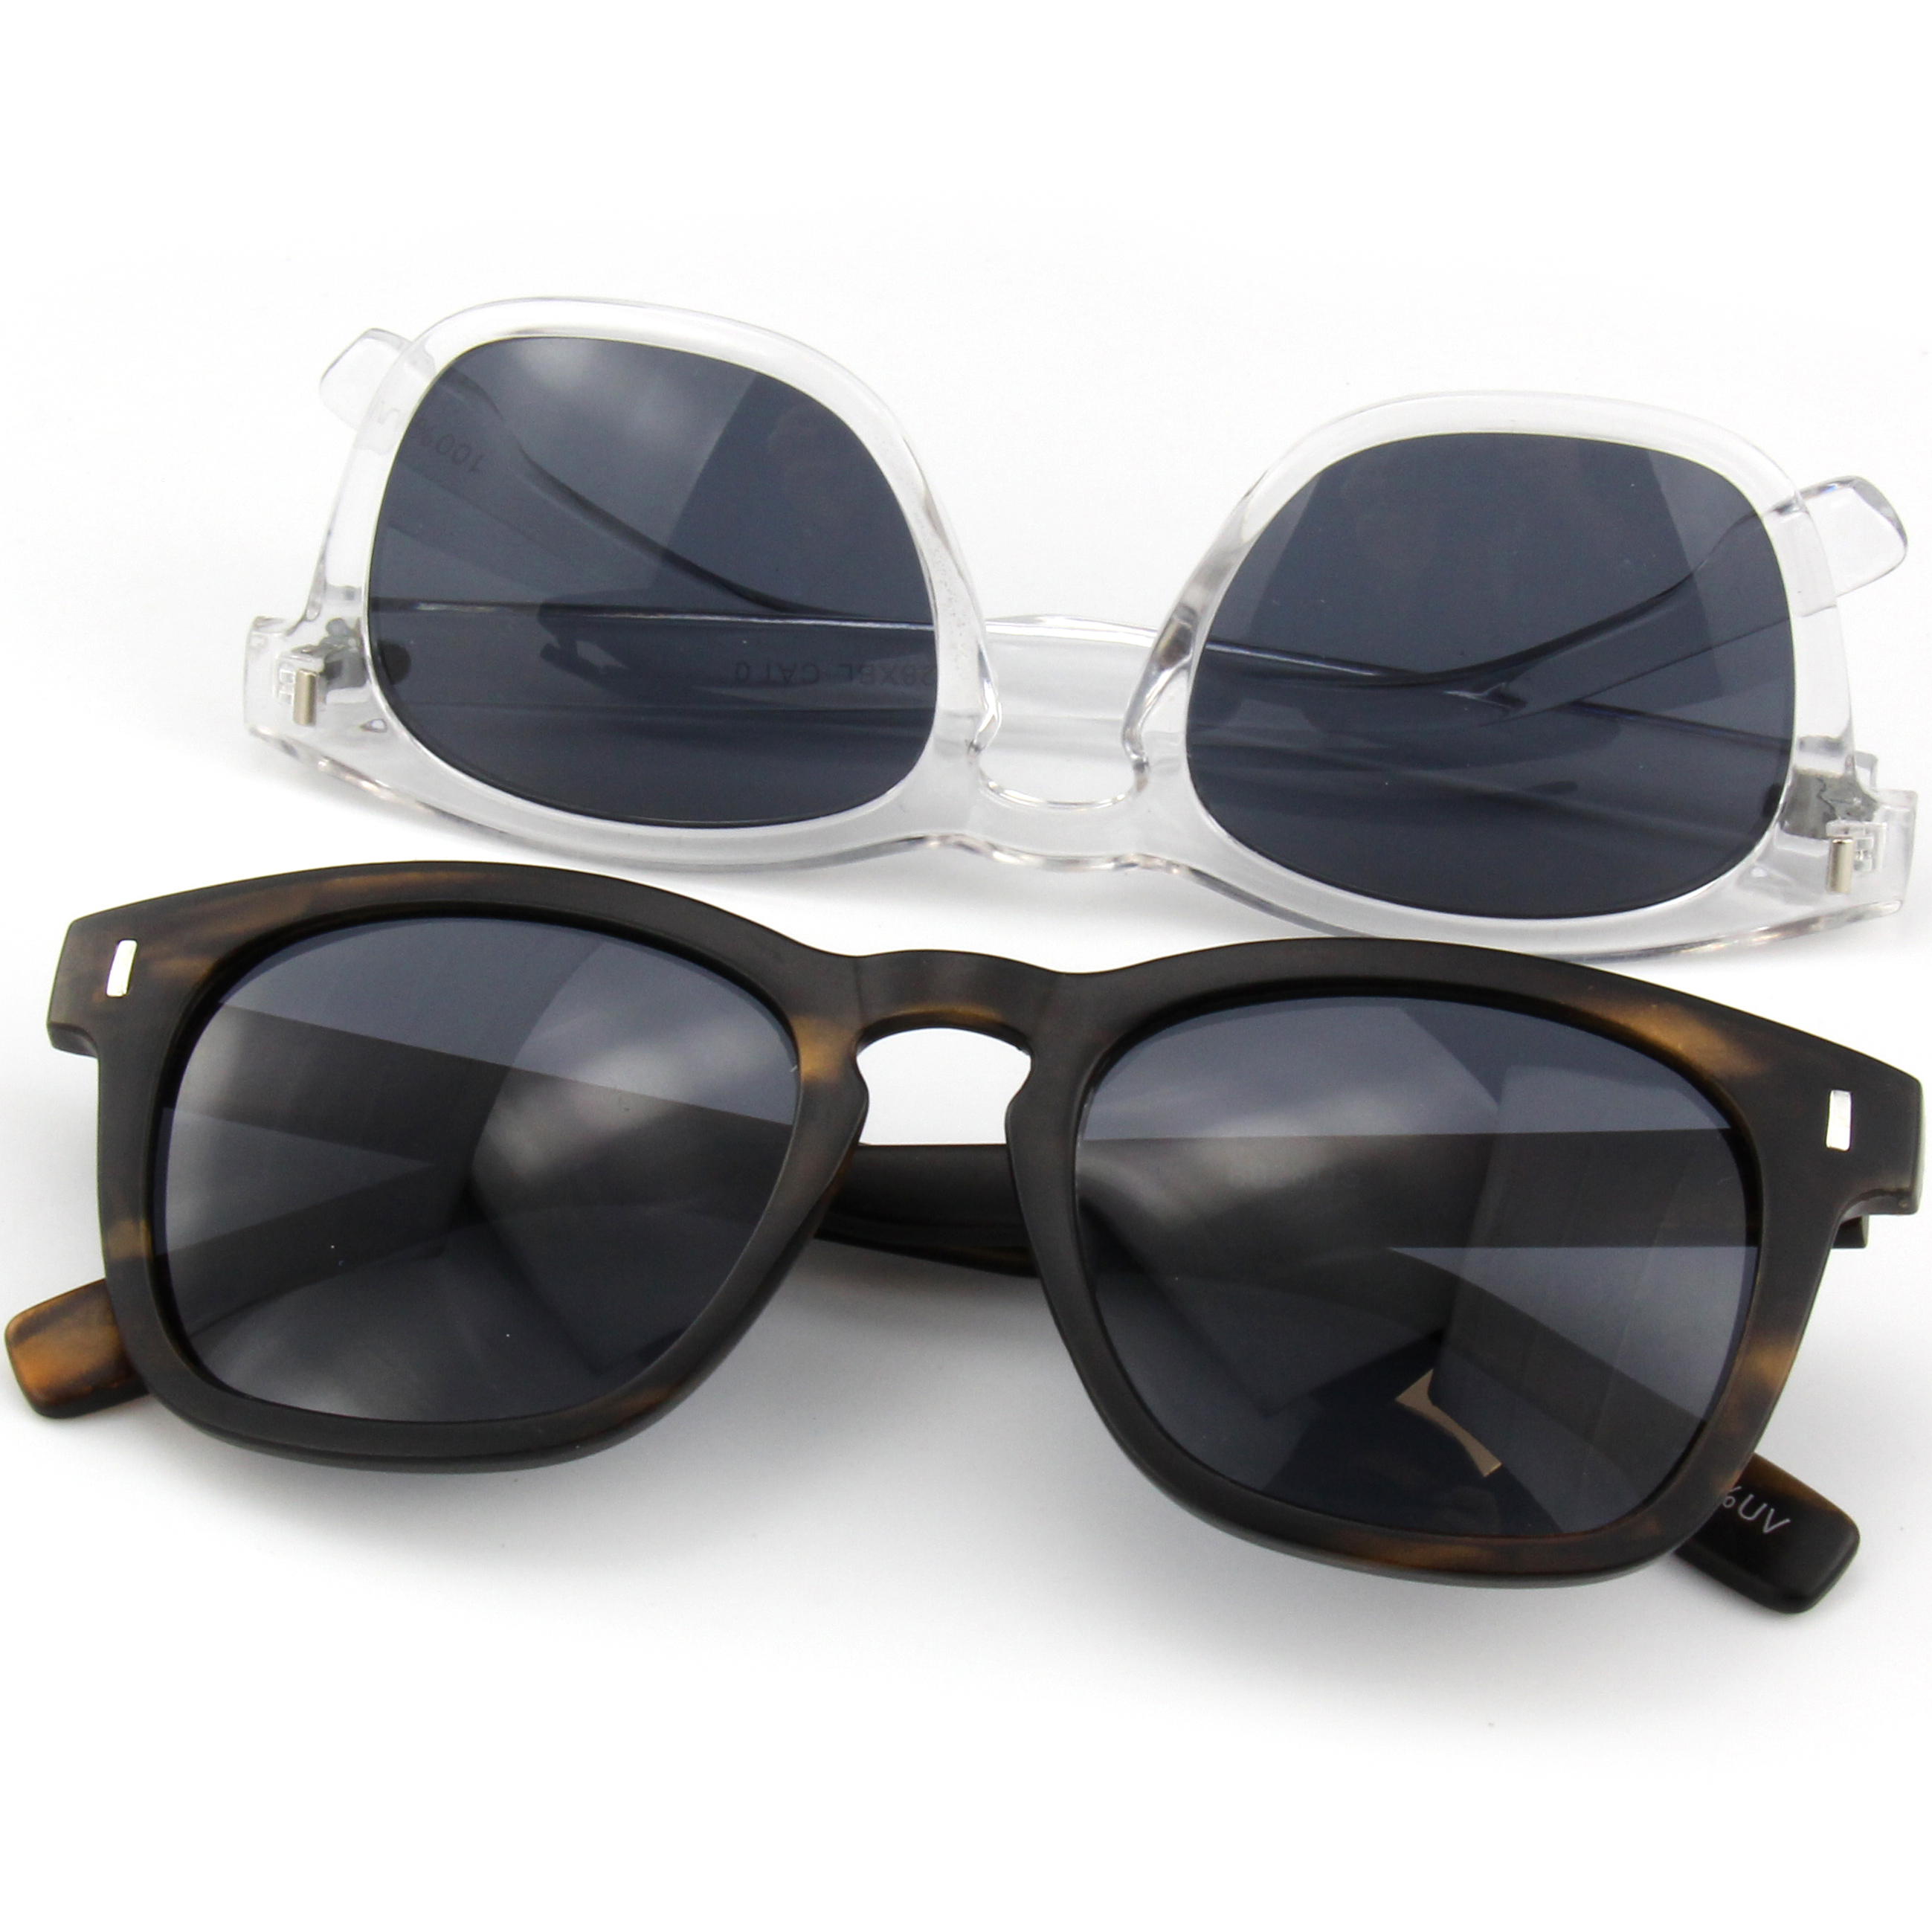 Eugenia Sunglasses 2021 Shades Hombres polarizados Gafas de sol cuadradas de alta calidad